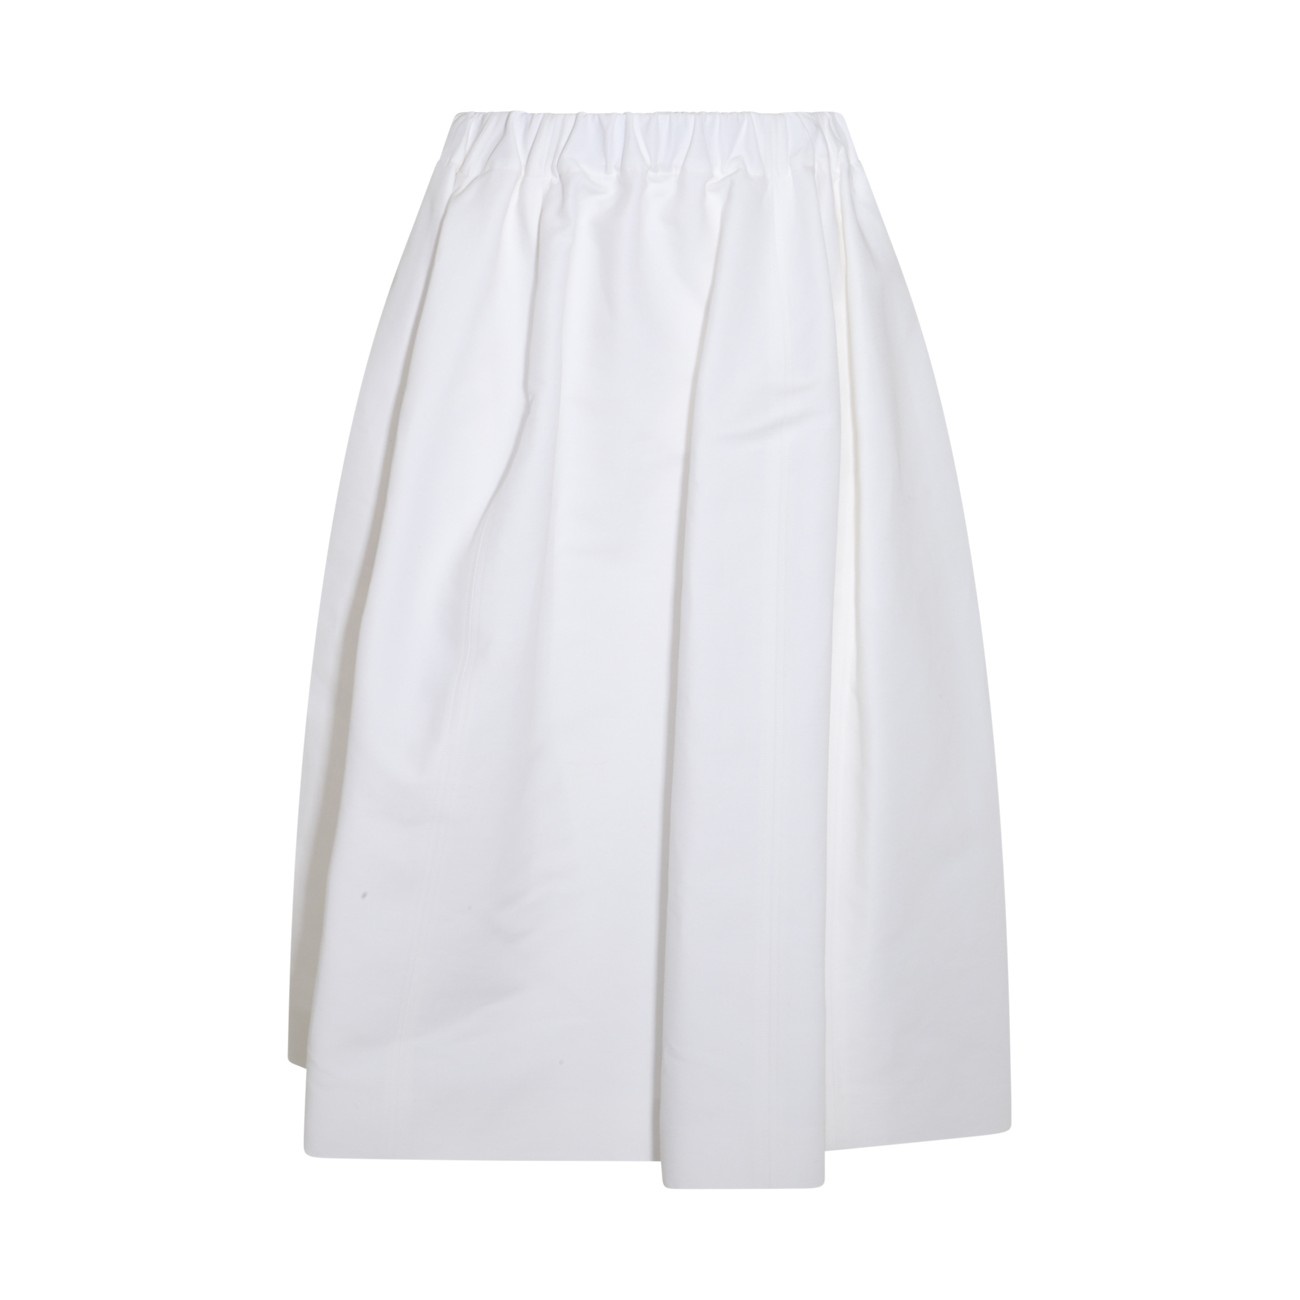 white cotton skirt - 1